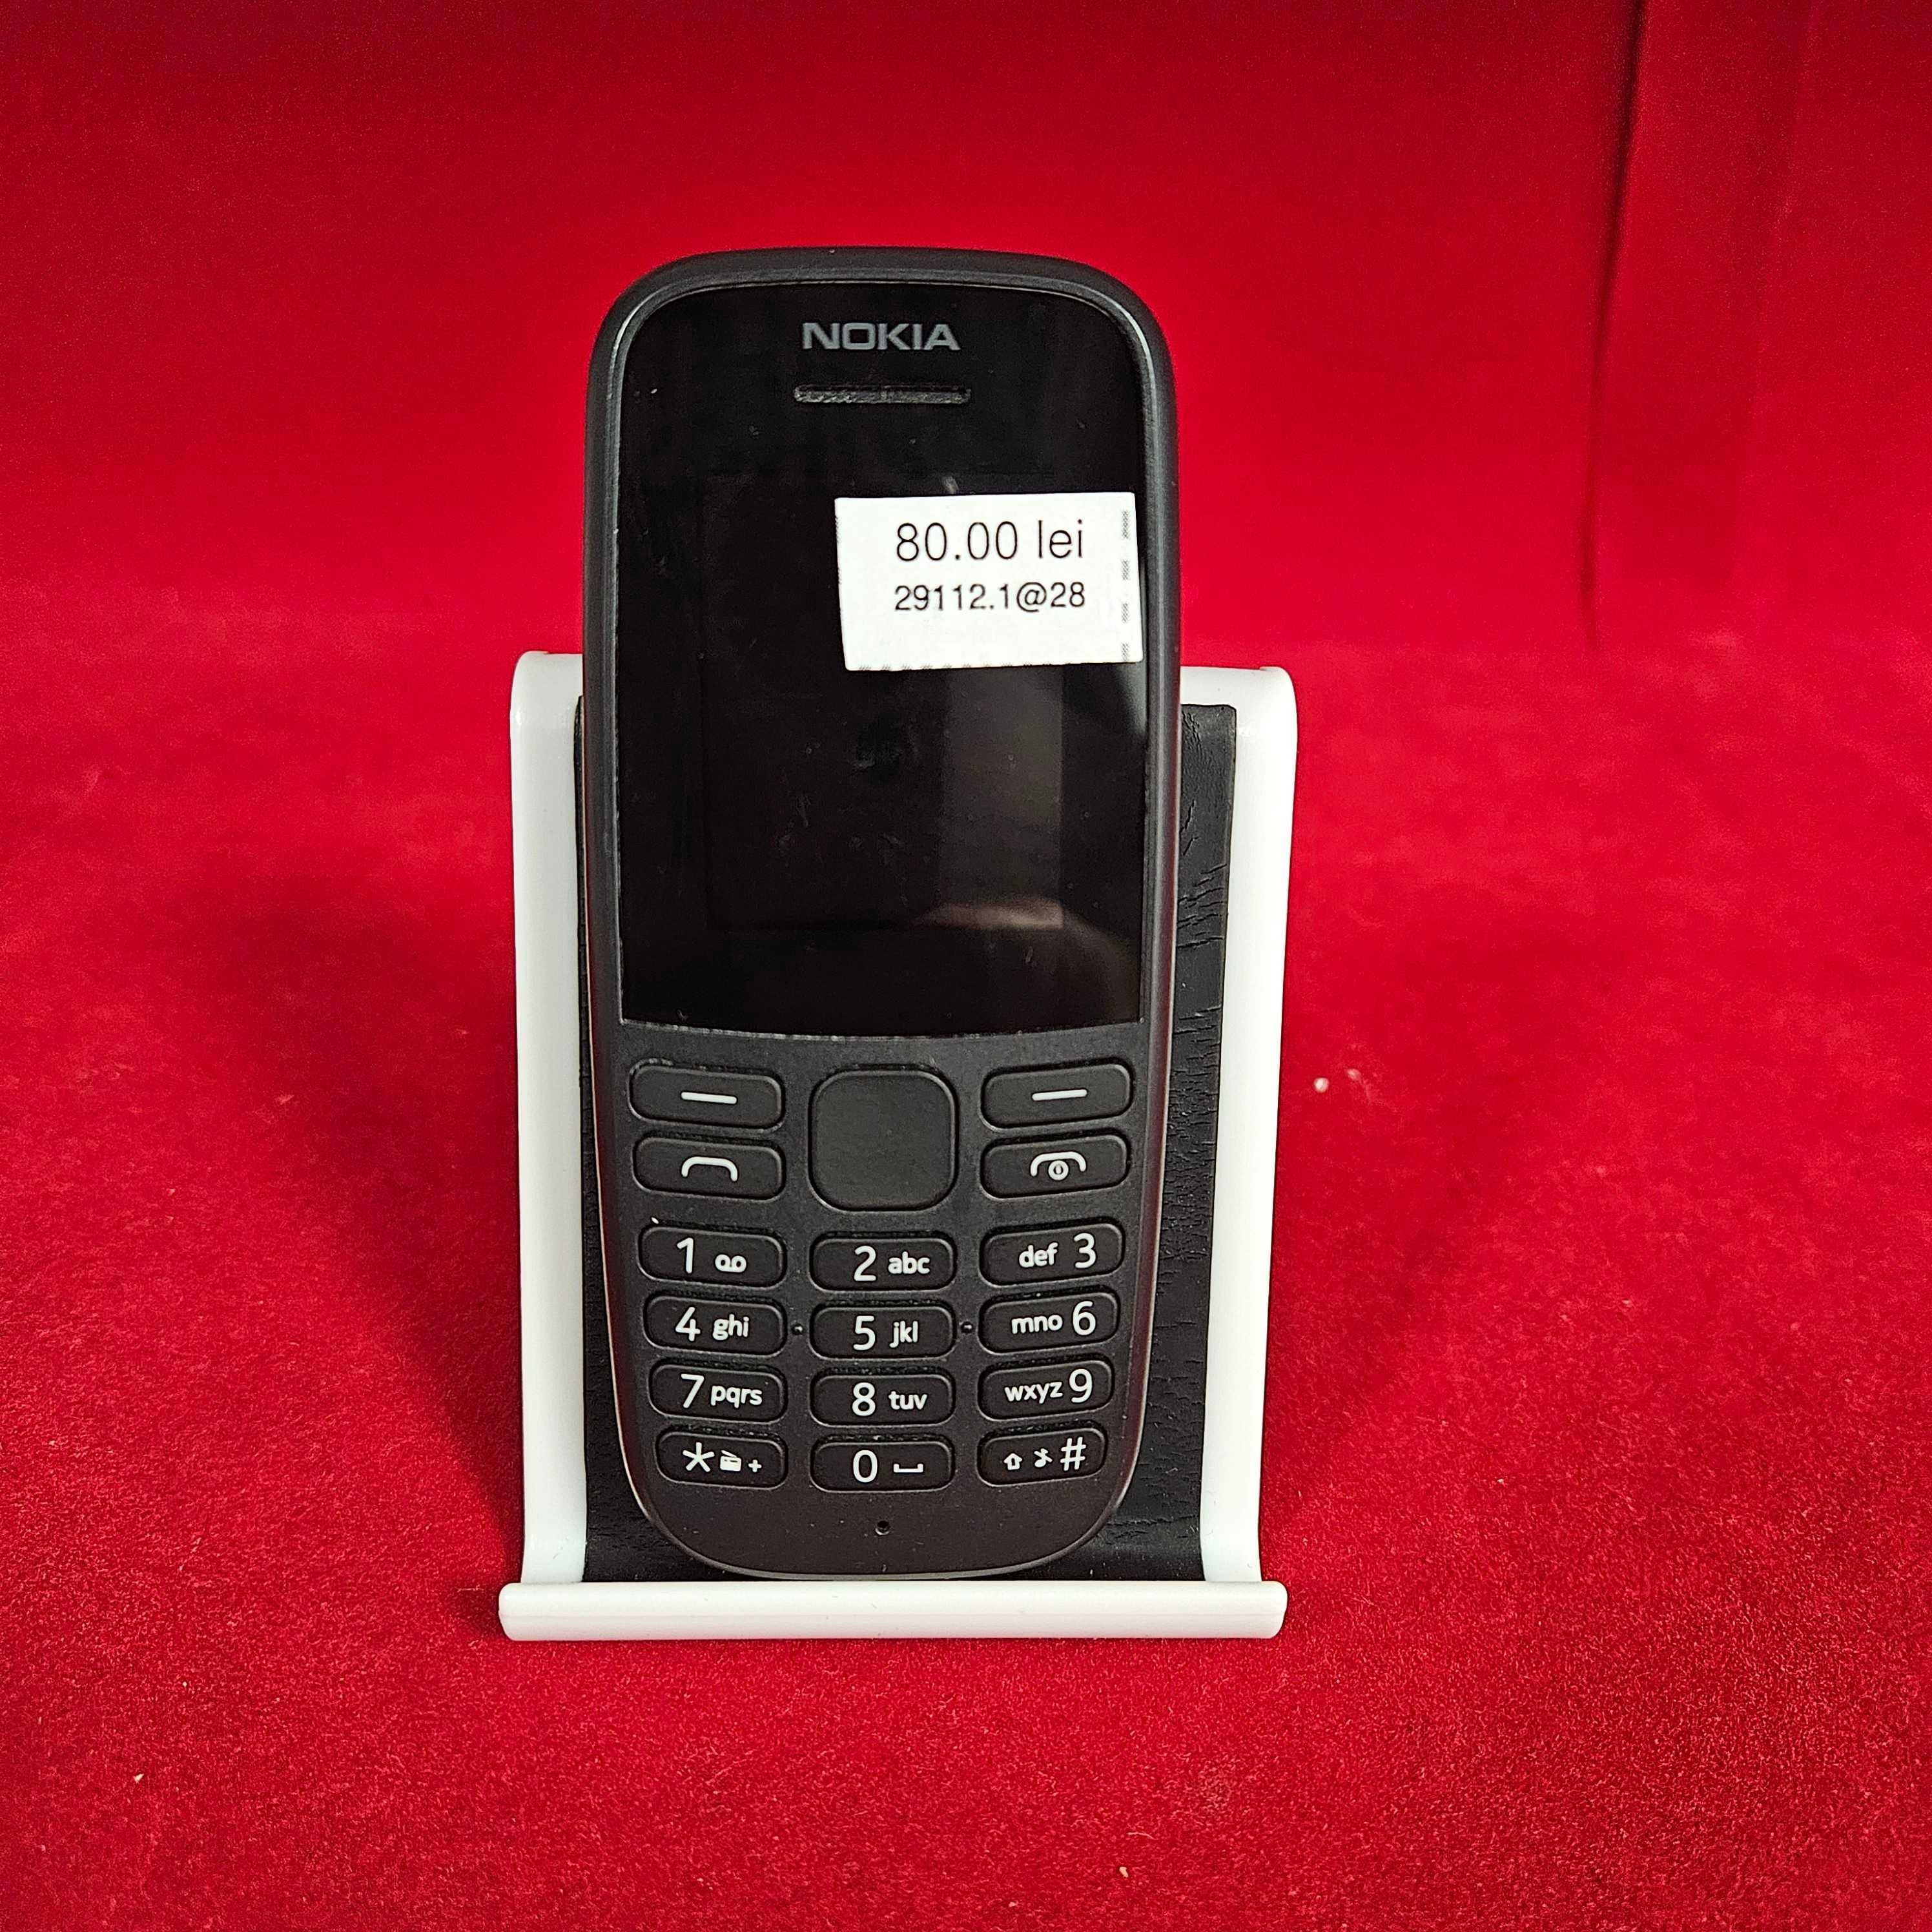 ( B29112.1 / Ag28 Doi Baieti ) Nokia 105 Cutie